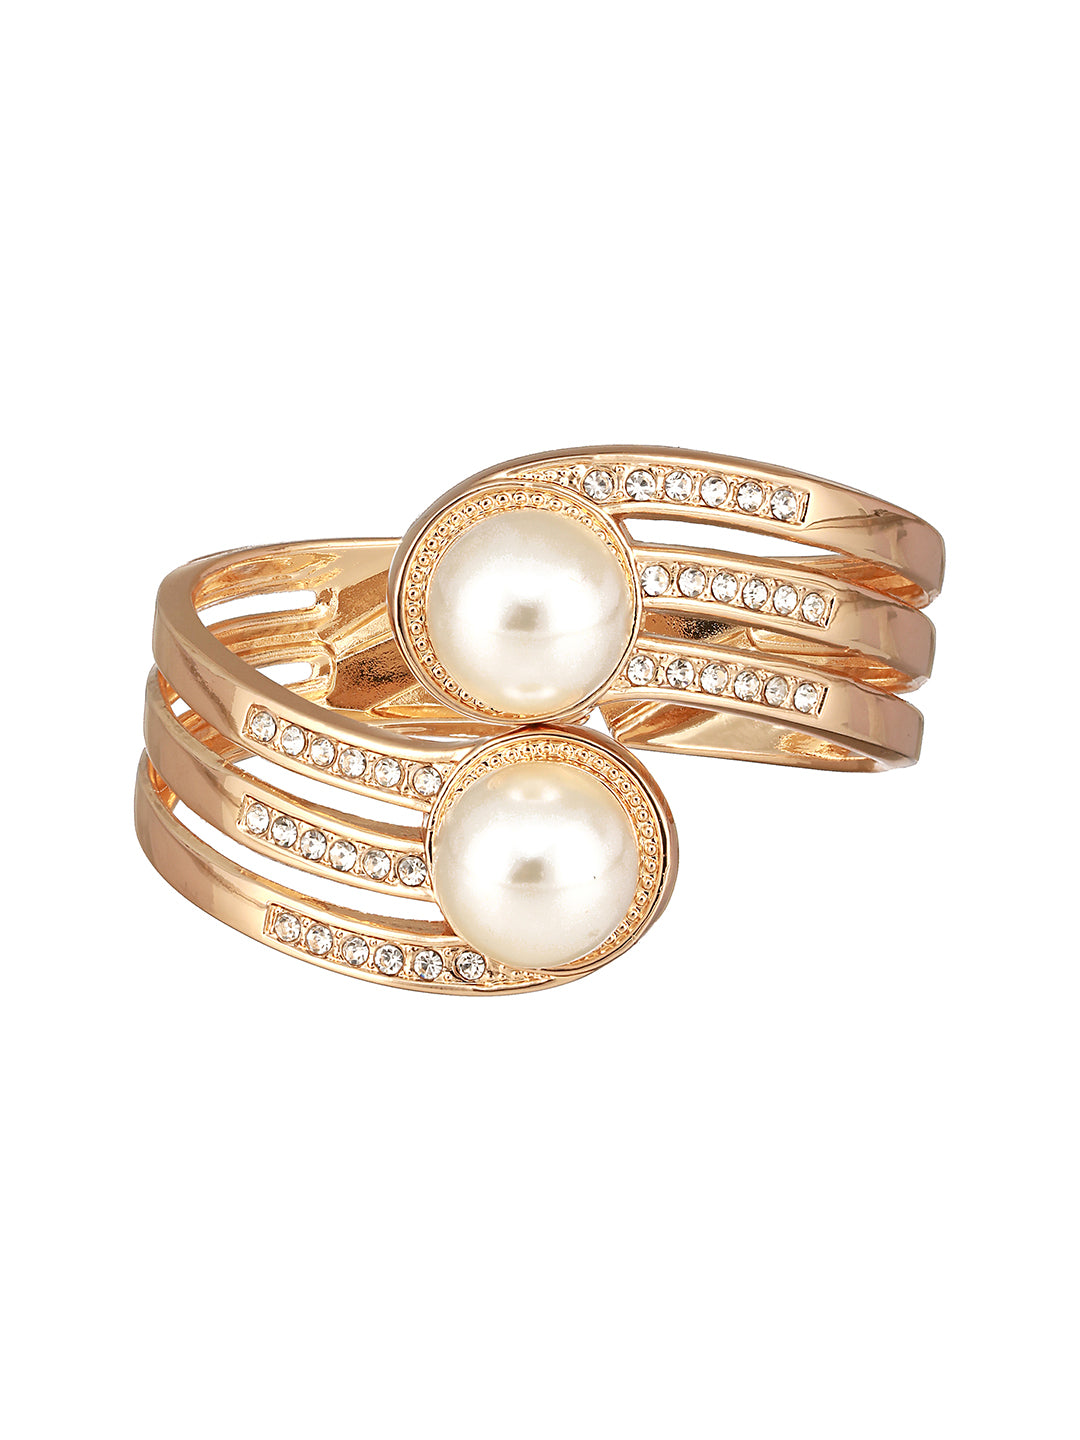 JAZZ AND SIZZLE Gold-Plated CZ Studded White Pearls Cuff Bracelet - Jazzandsizzle